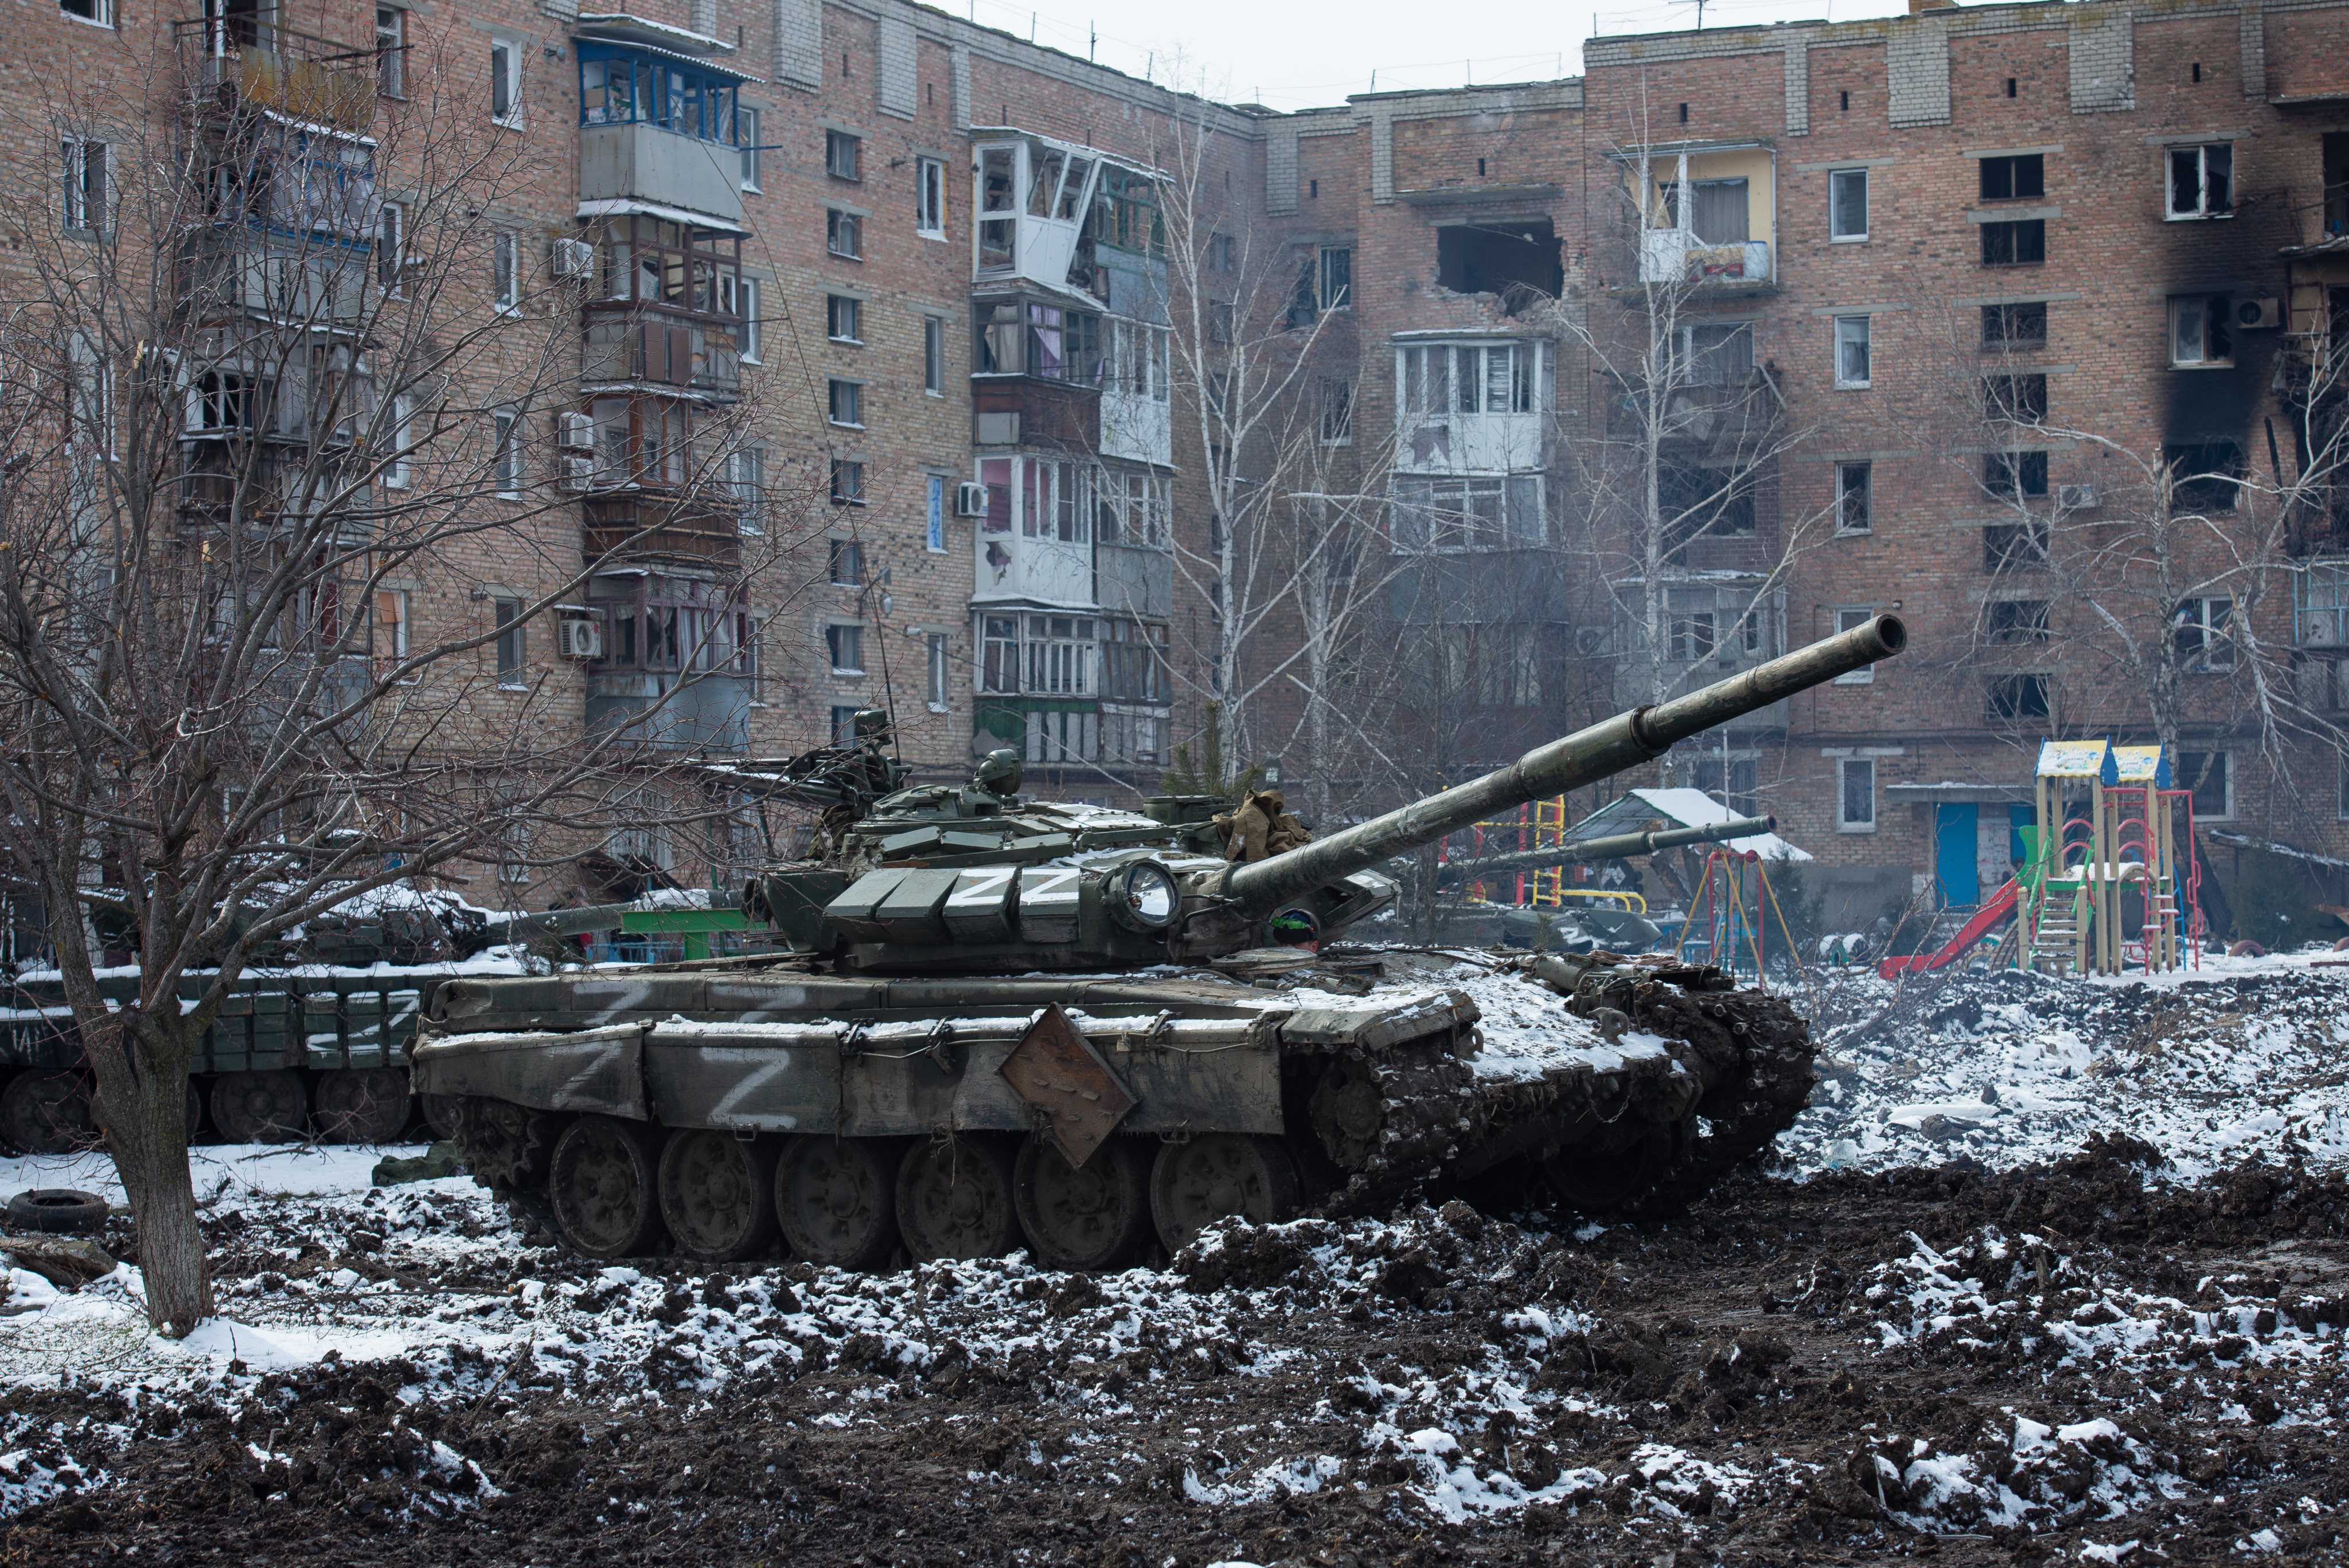 Civilians await evacuation and humanitarian aid in Donetsk